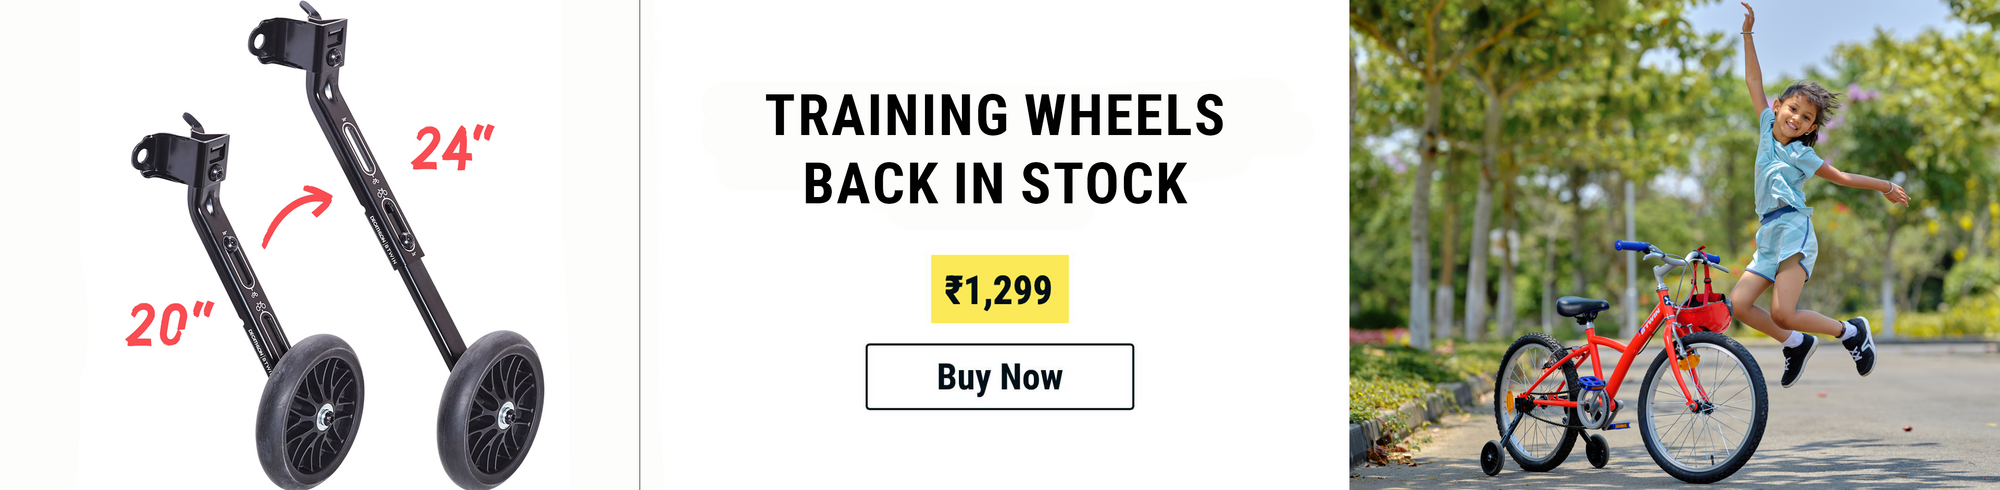 Training wheels back in stock